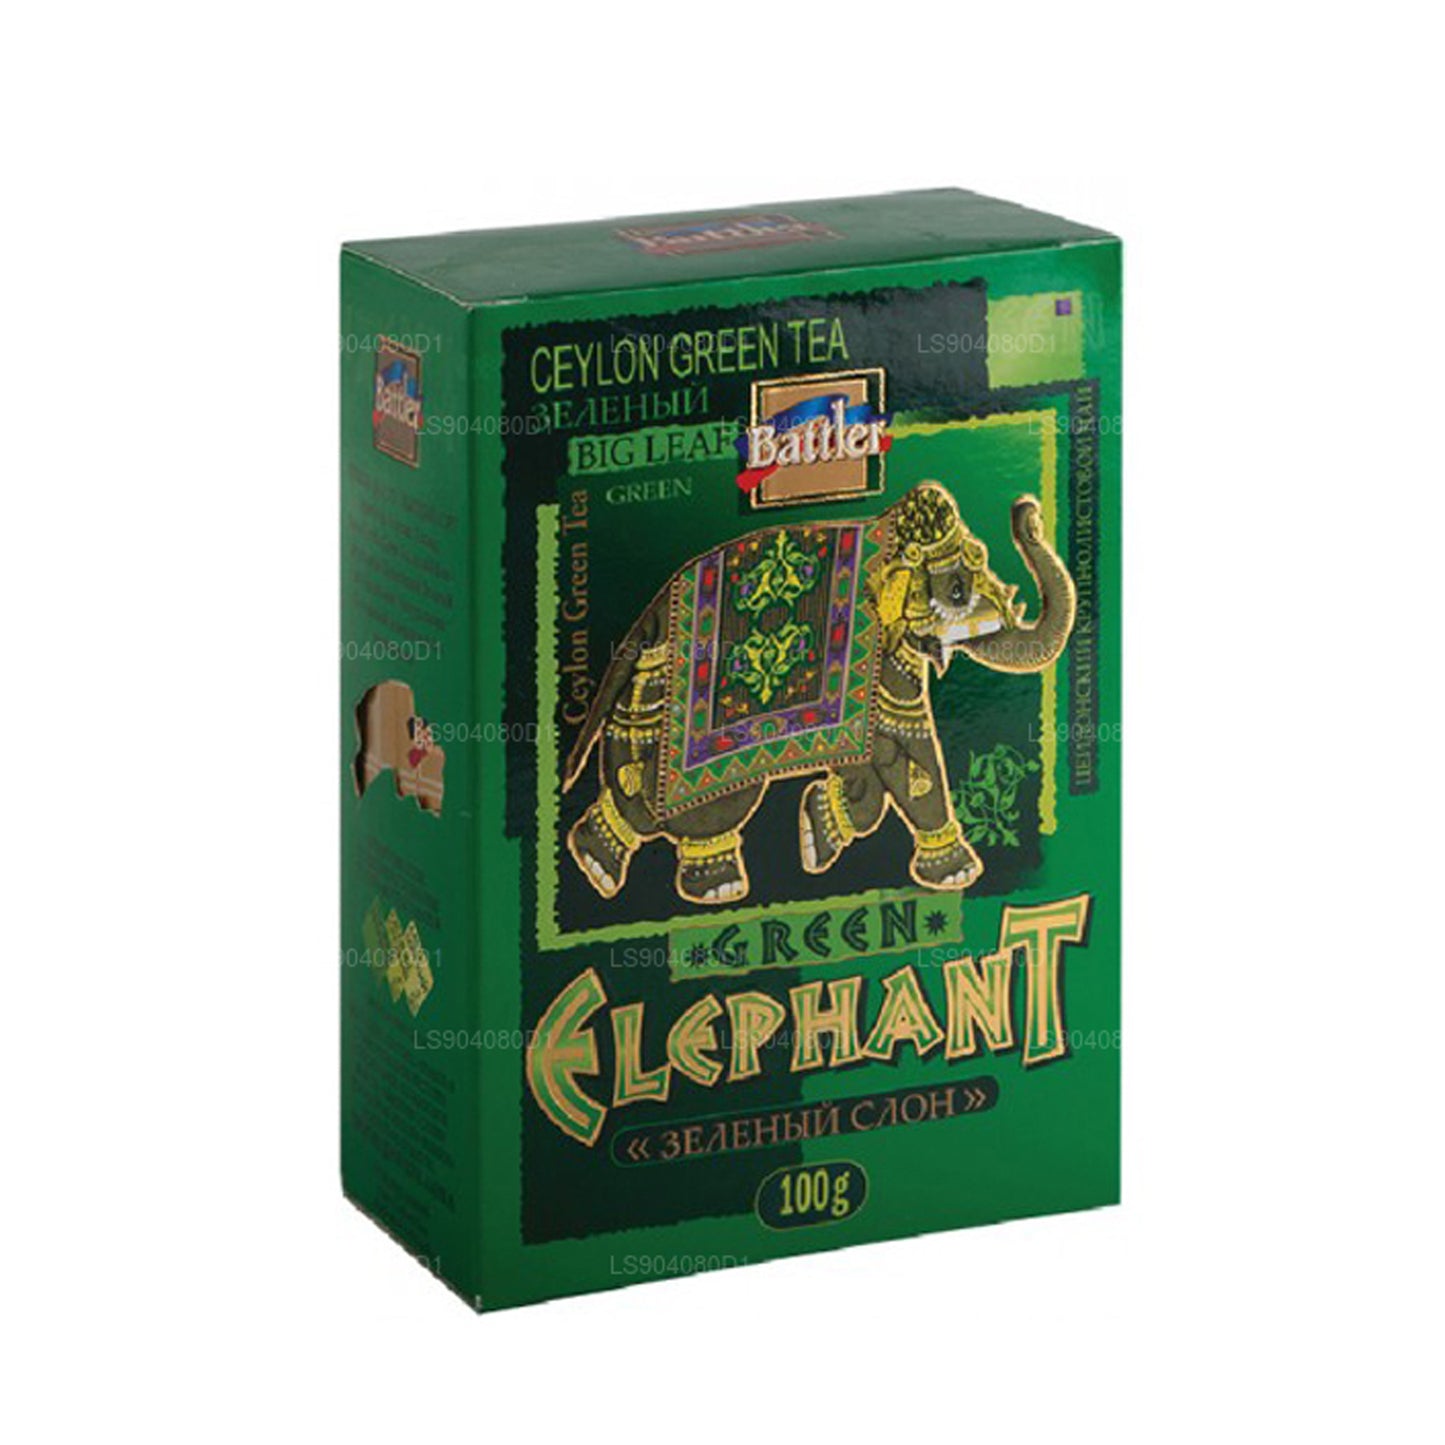 Battler Green Elephant (100g) Loose Leaf Tea